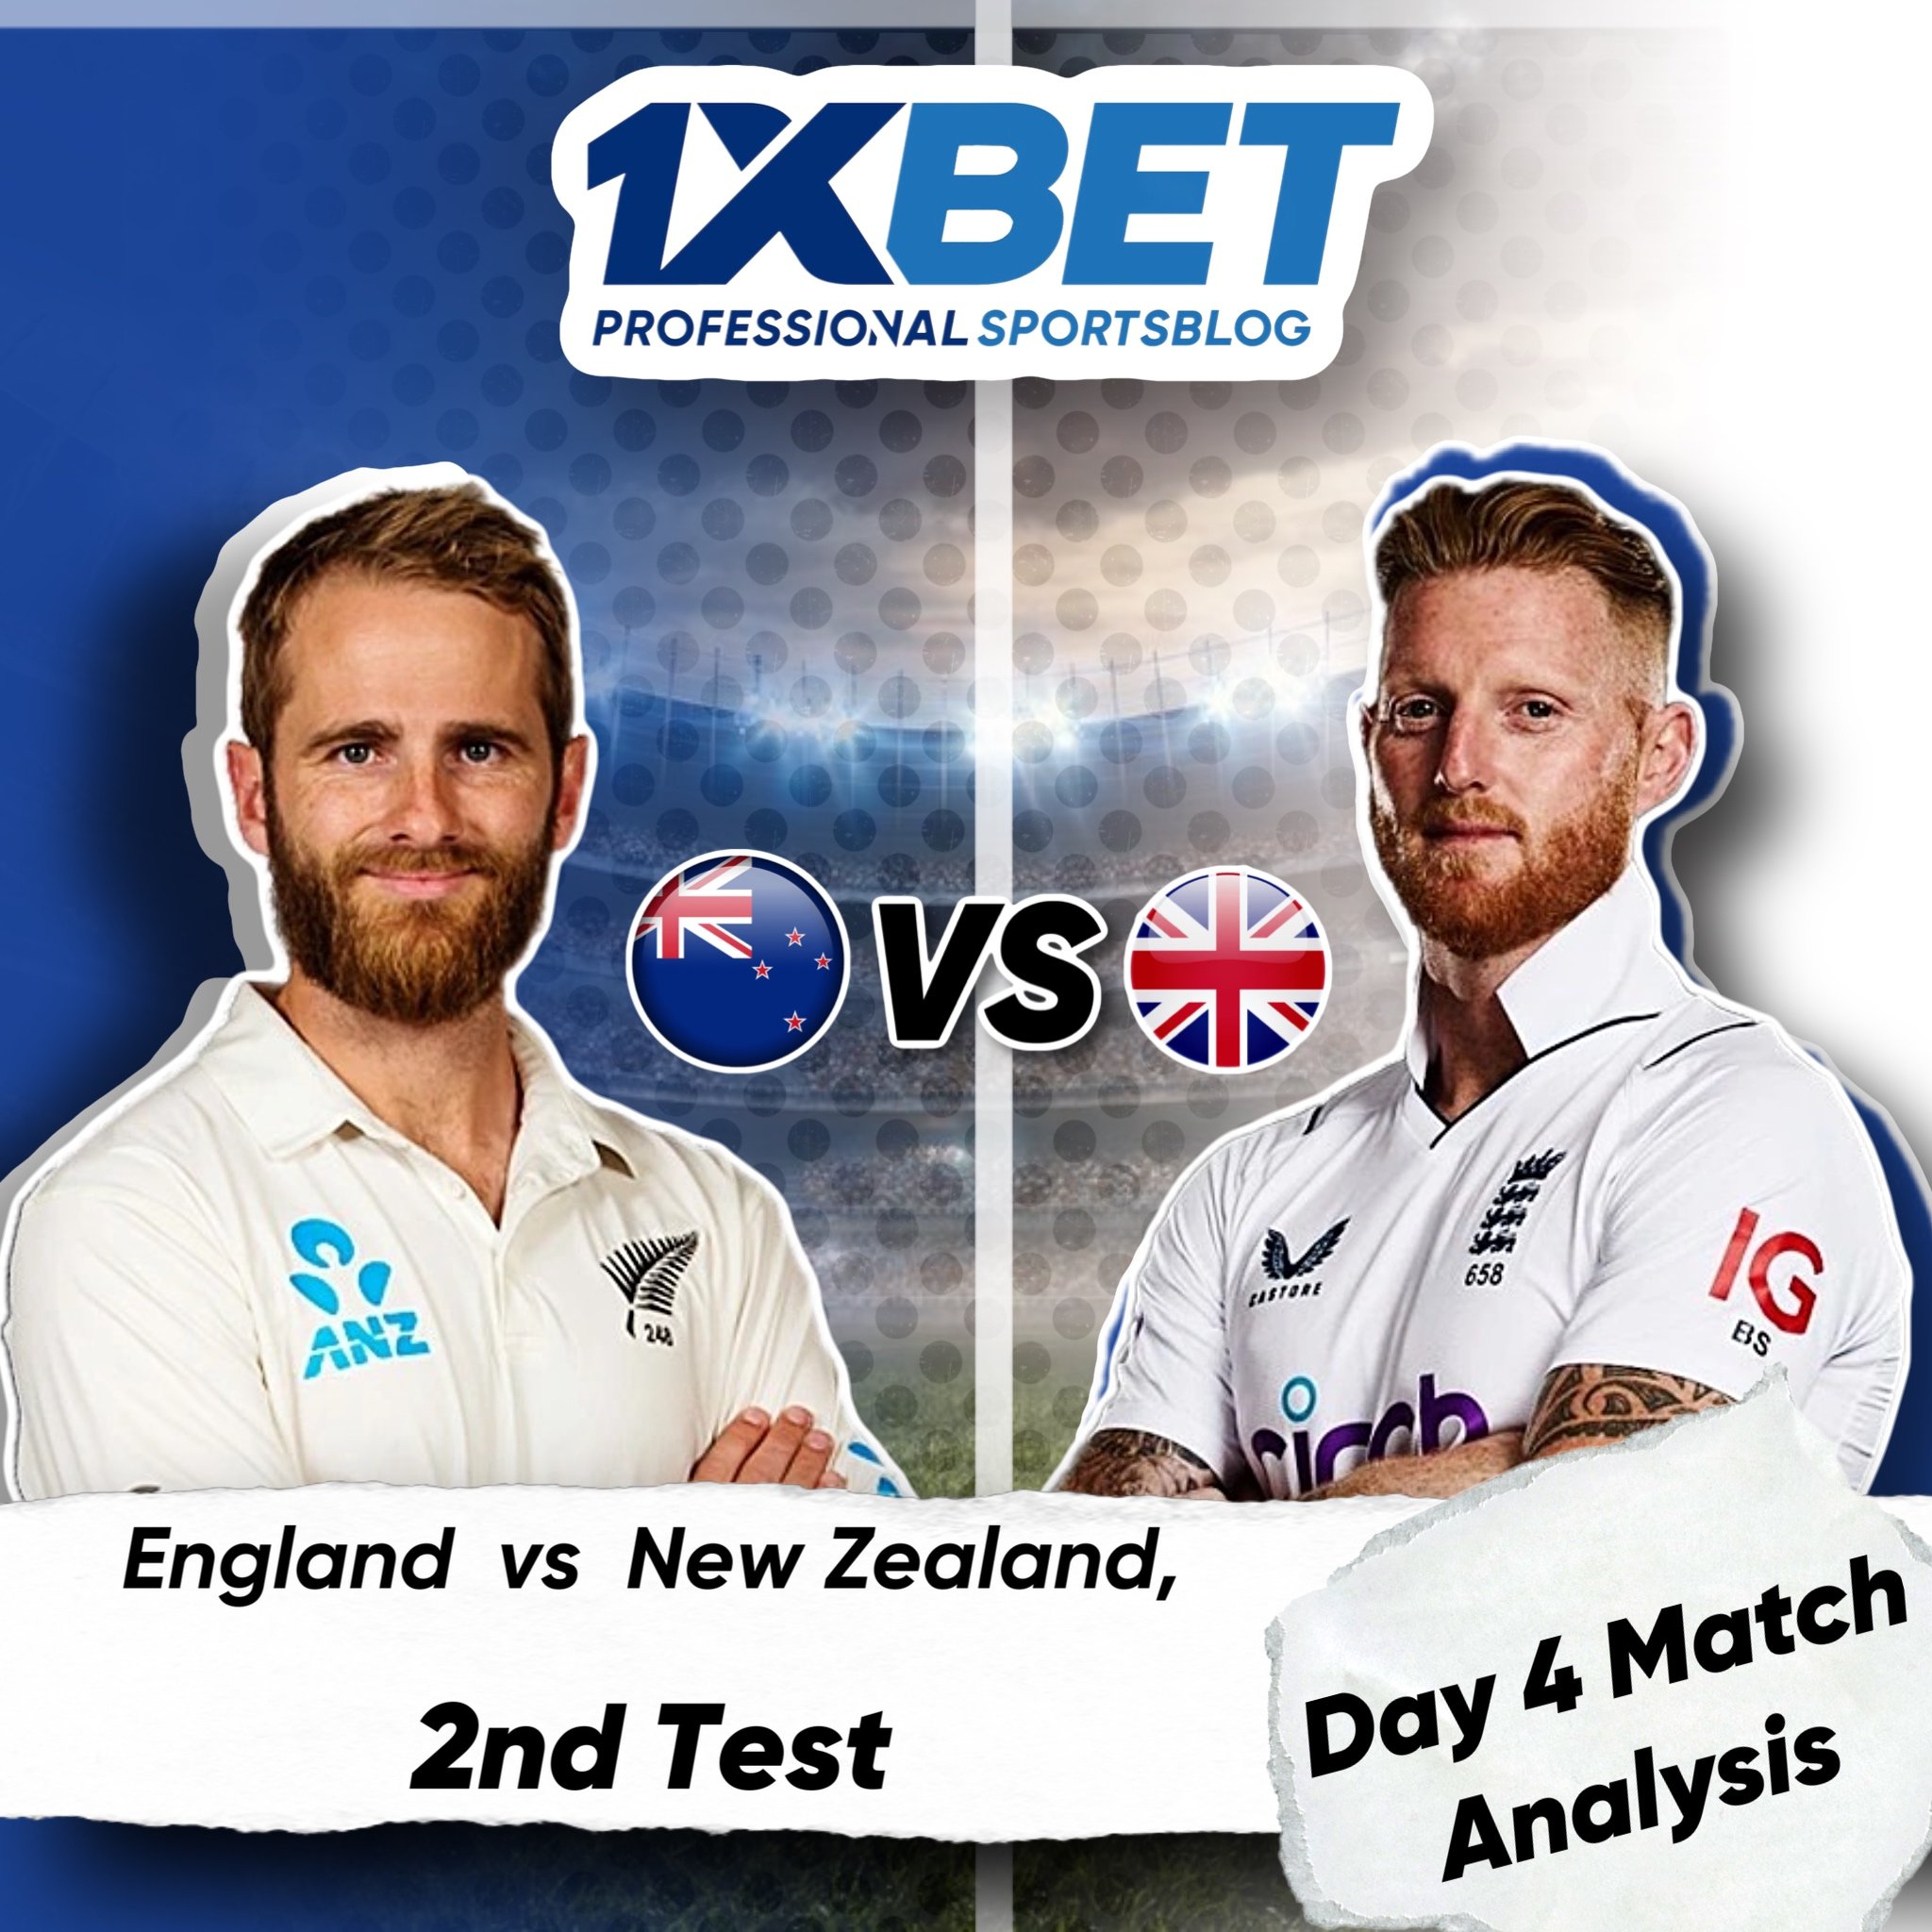 India vs Australia, 3rd Test, Day 4 Match Analysis